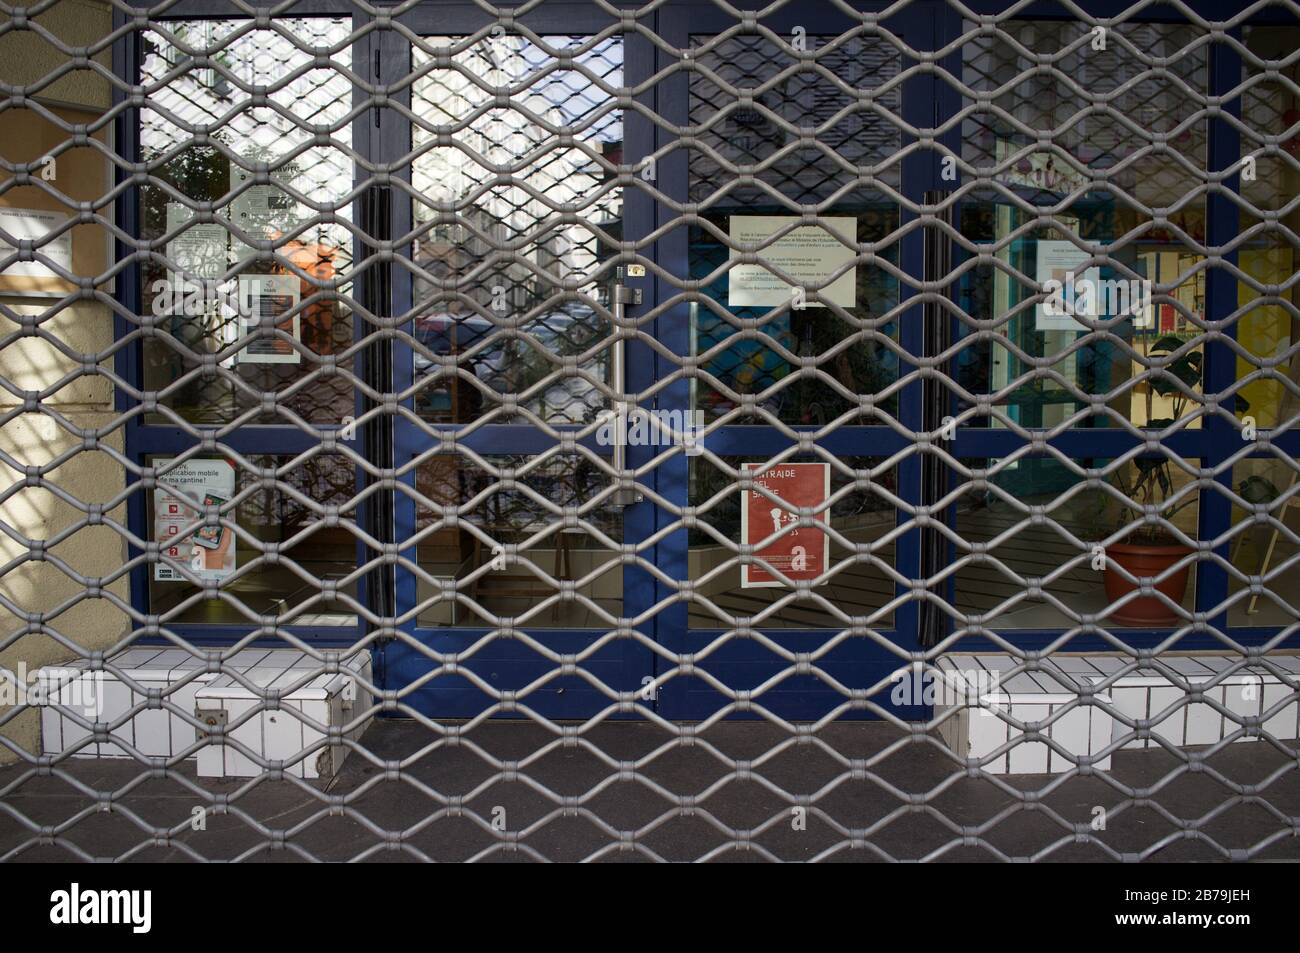 Paris school closed due to Coronavirus outbreak, rue André del Sarte, 75018 Paris, France Stock Photo